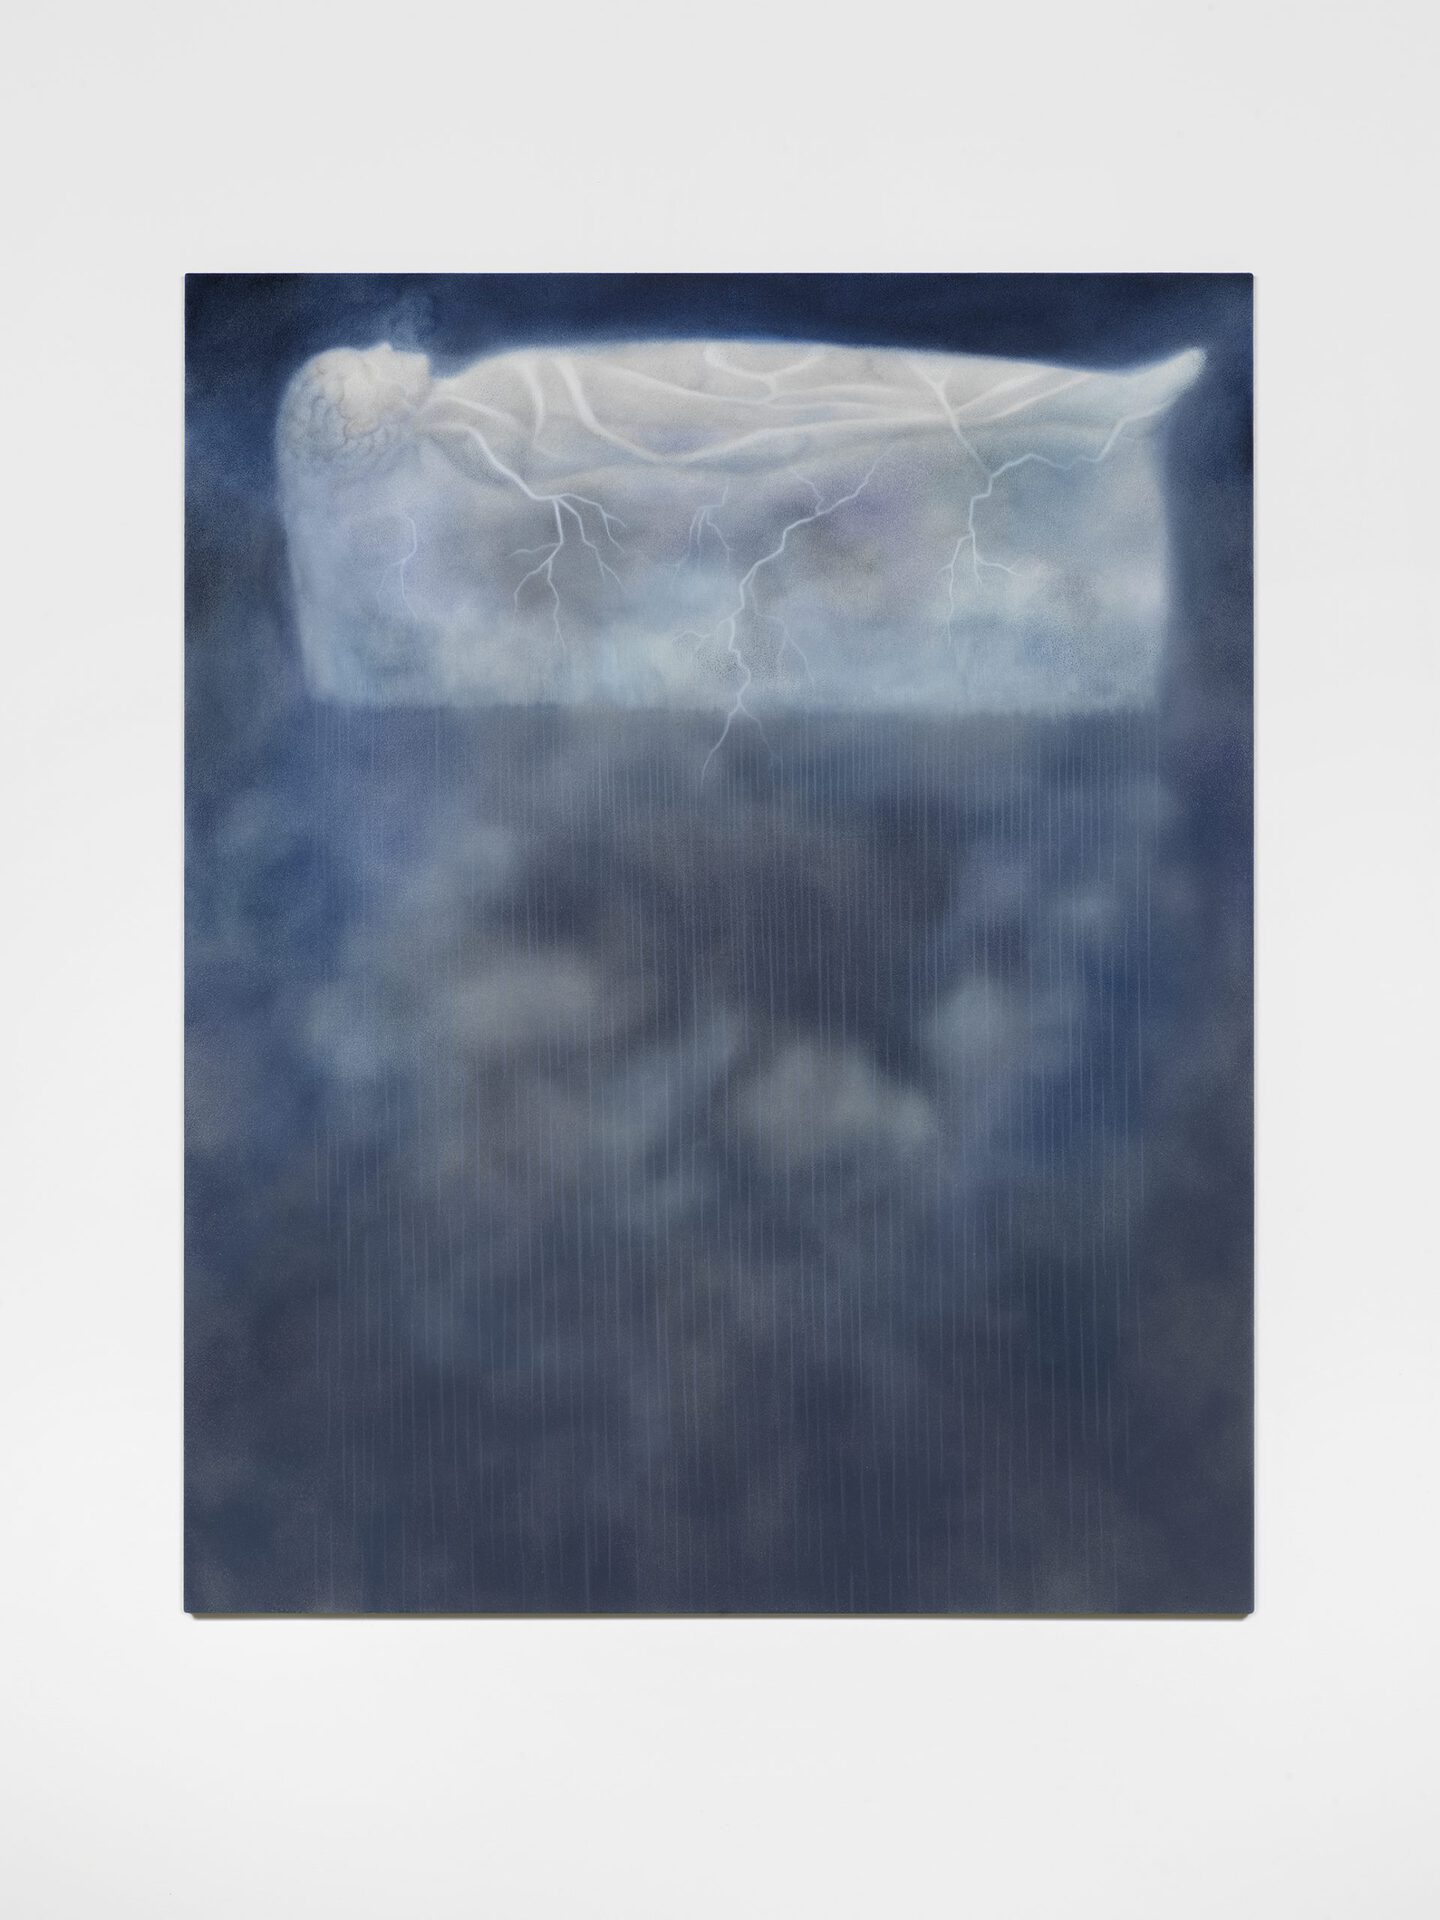 Sarah Księska, Storm, 2022, Oil on primed aluminum panel, 39 1/2 x 31 1/2 x 1/2 inches (100 x 80 cm)